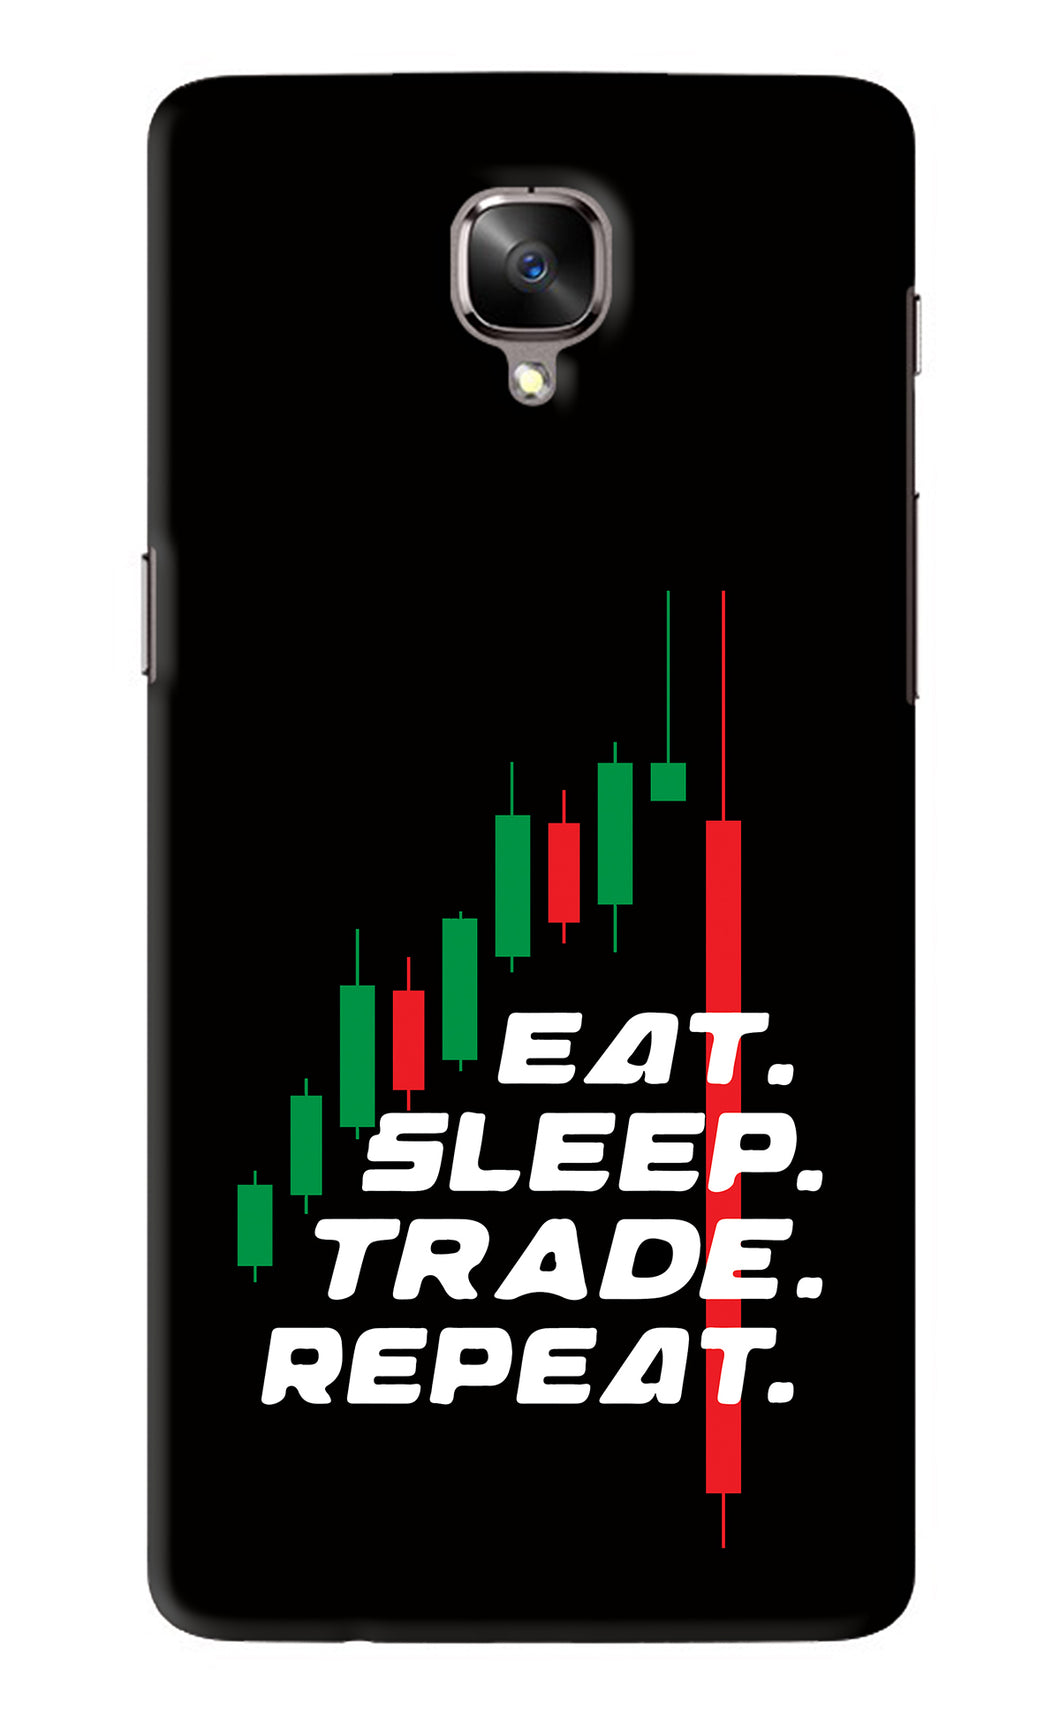 Eat Sleep Trade Repeat OnePlus 3 Back Skin Wrap